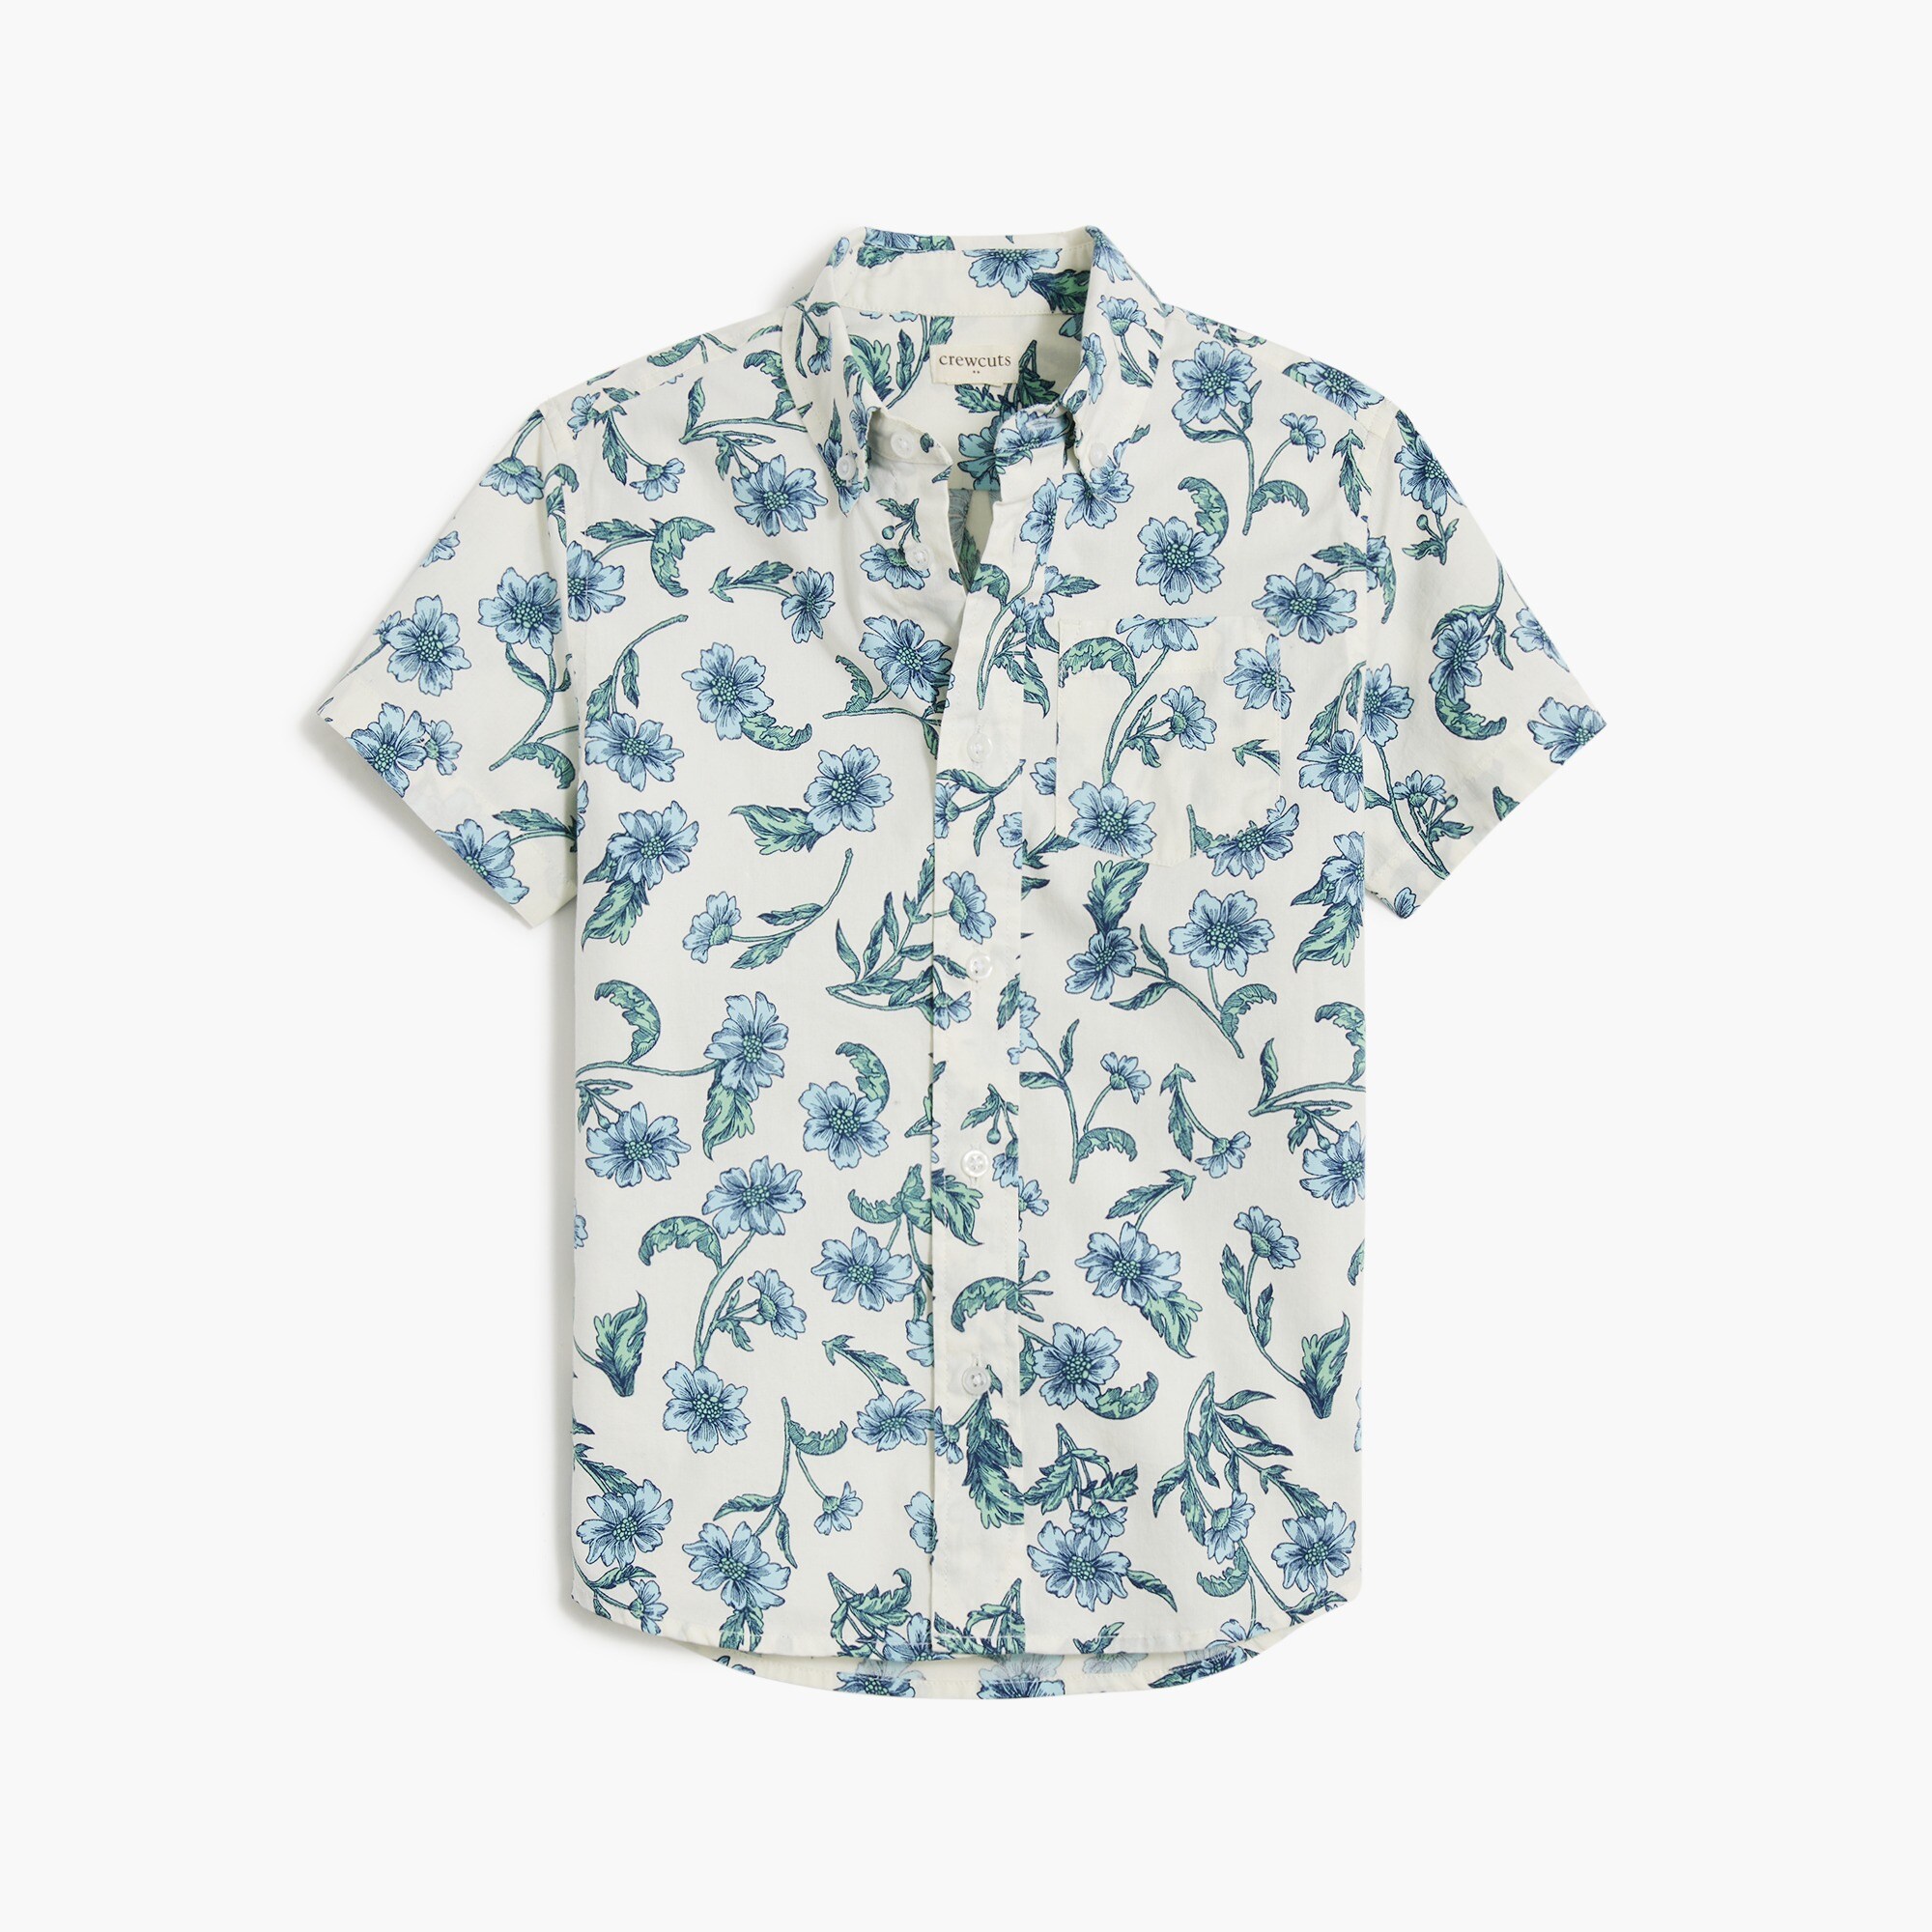  Boys' floral shirt